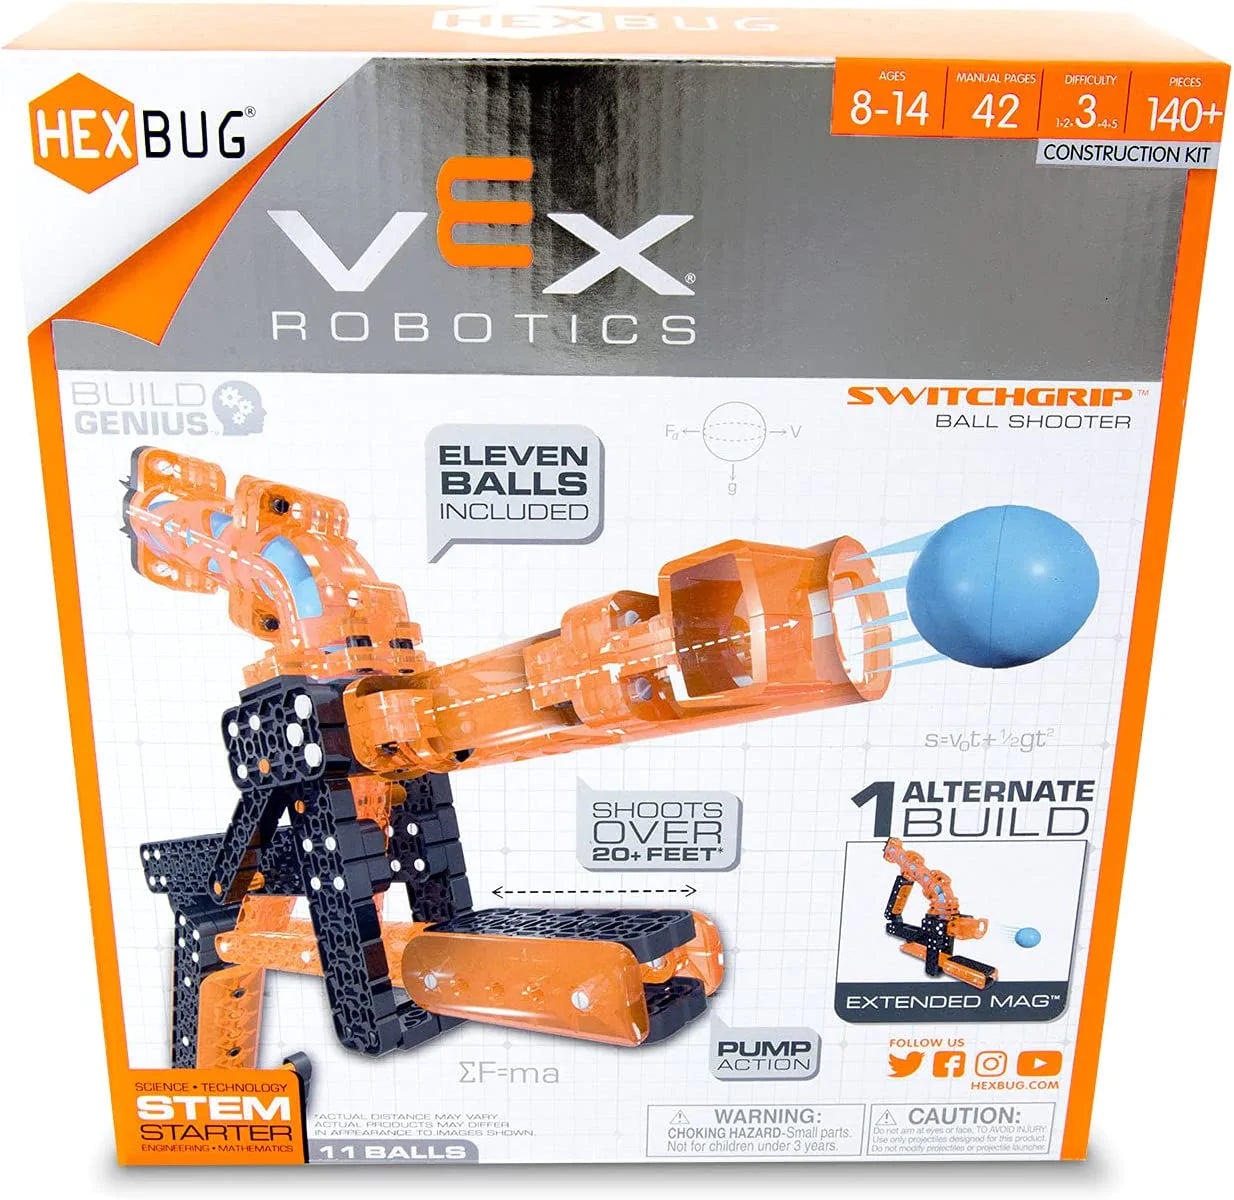 Hexbug Vex Robotics Switchgrip Ball Shooter